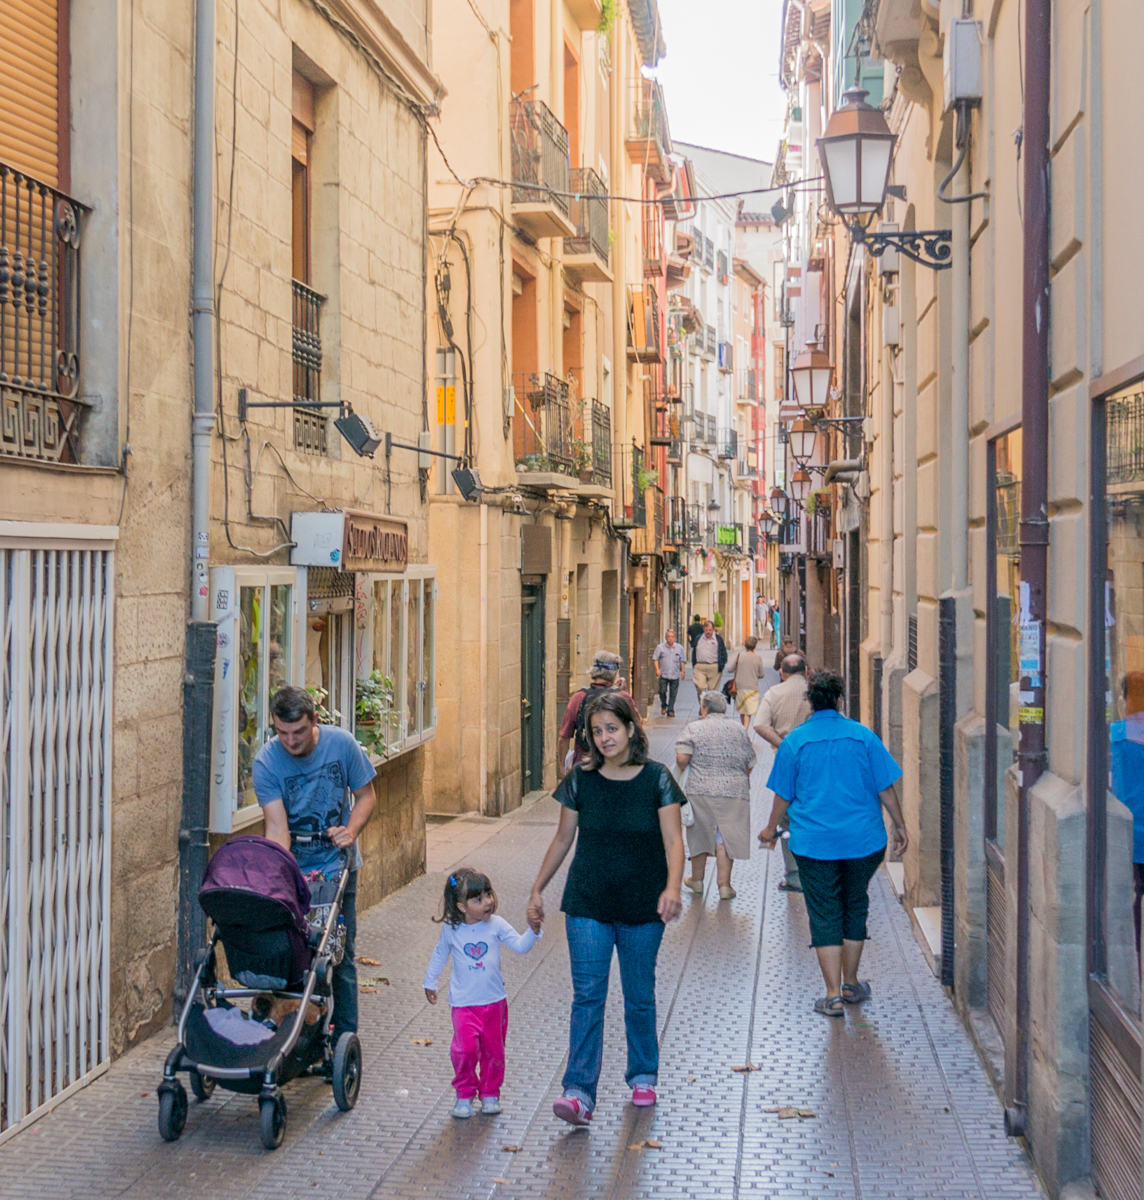 Camino pilgrim Maria (on right in blue shirt) walks through Logroño, Spain, in search of 2nd night, non-pilgrim lodging | Photo by Mike Hudak